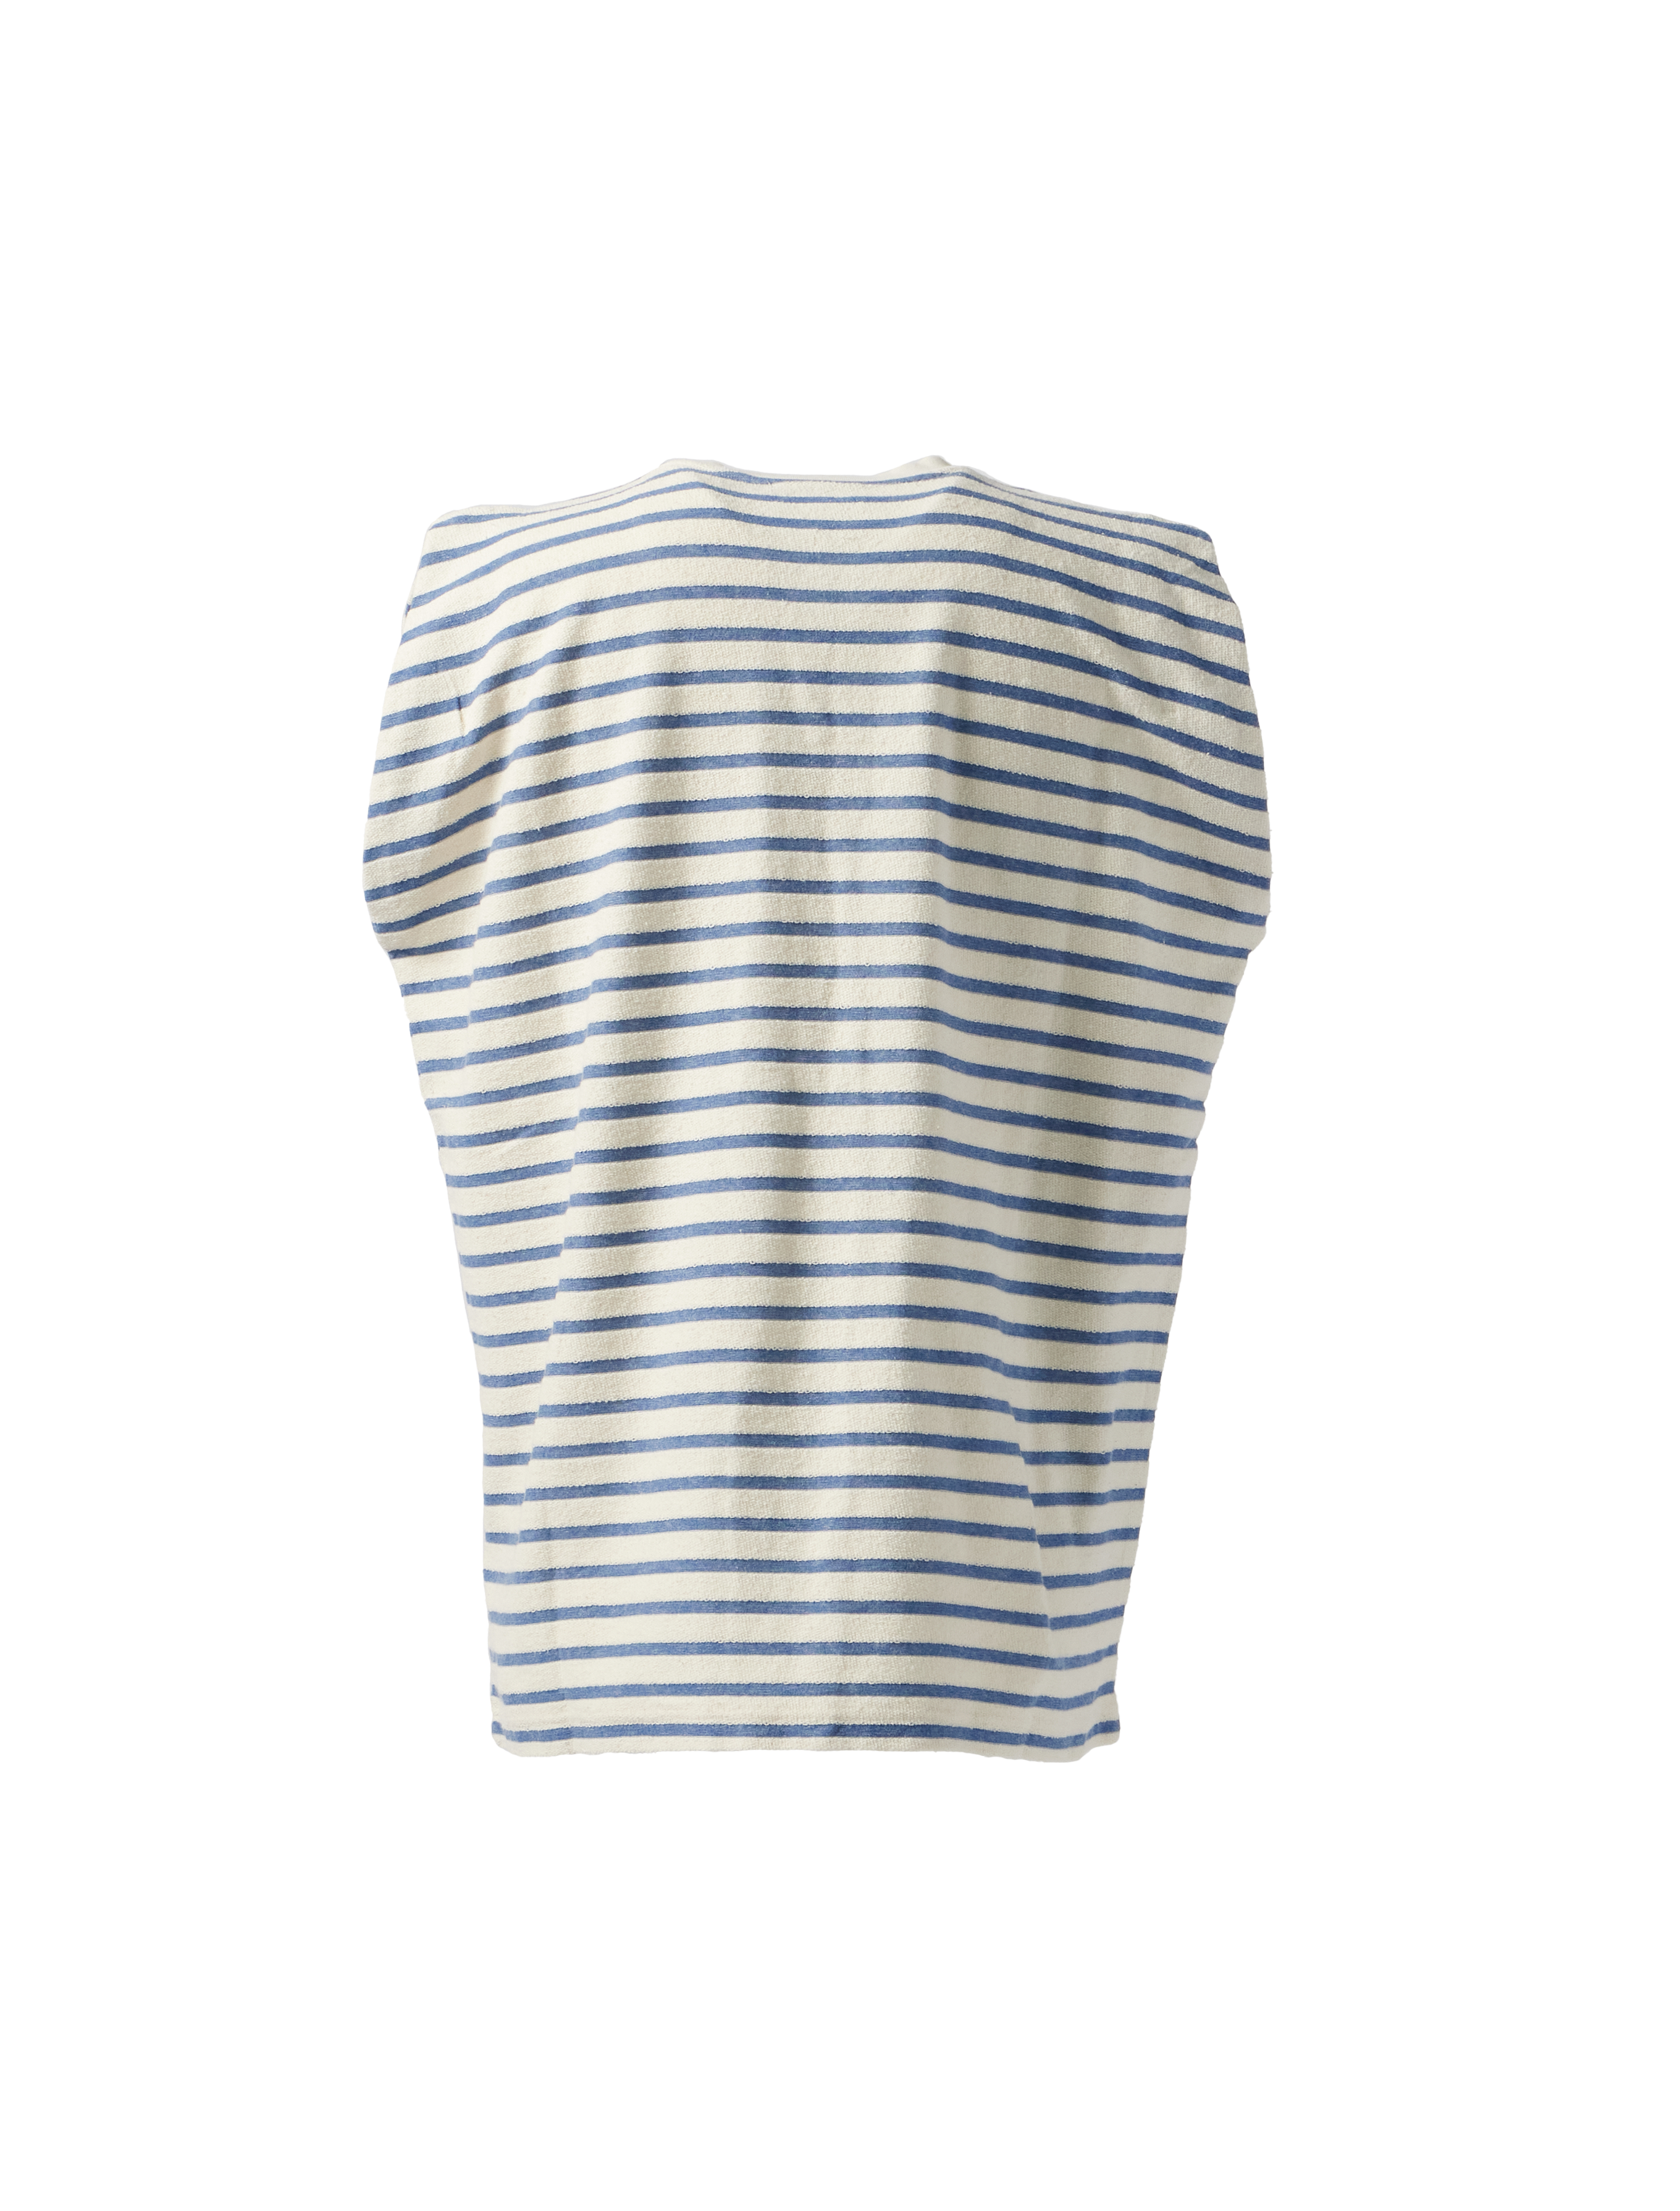 JW ANDERSON - Grape Sleeveless T-Shirt product image